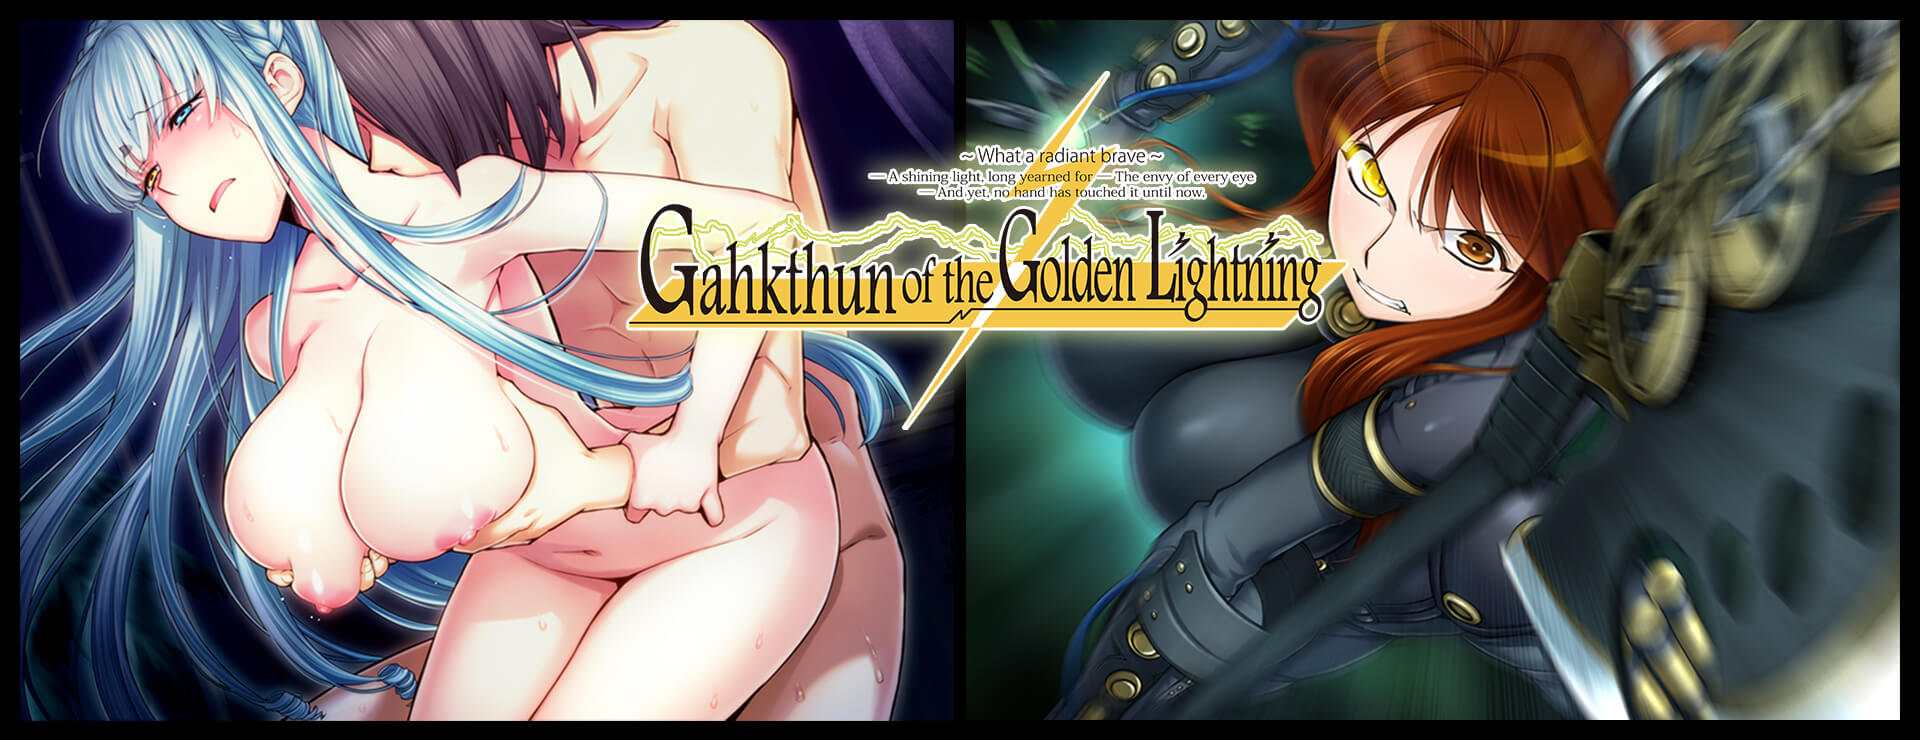 Gahkthun of the Golden Lightning - Novela Visual Juego